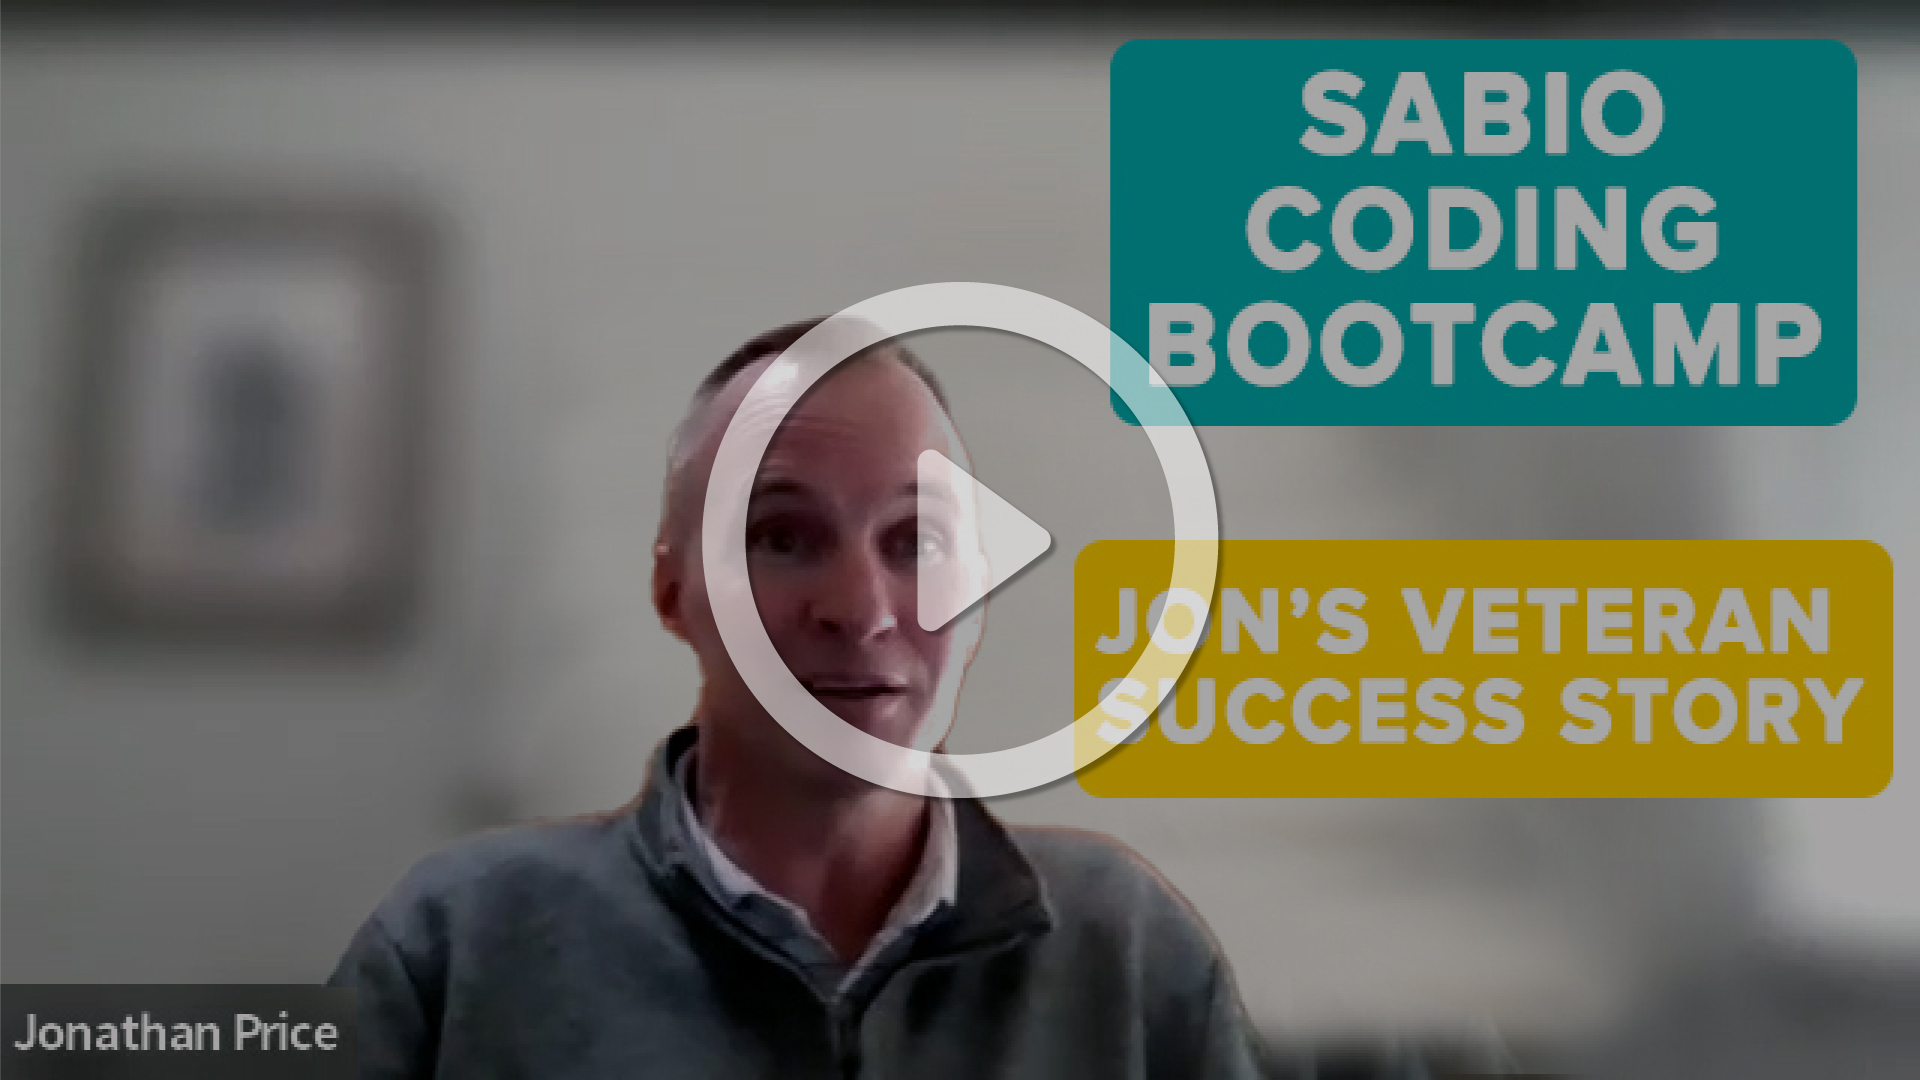 Sabio Coding Bootcamp. Jon&#39;s Veteran Success Story. Play symbol overlaid to the image.